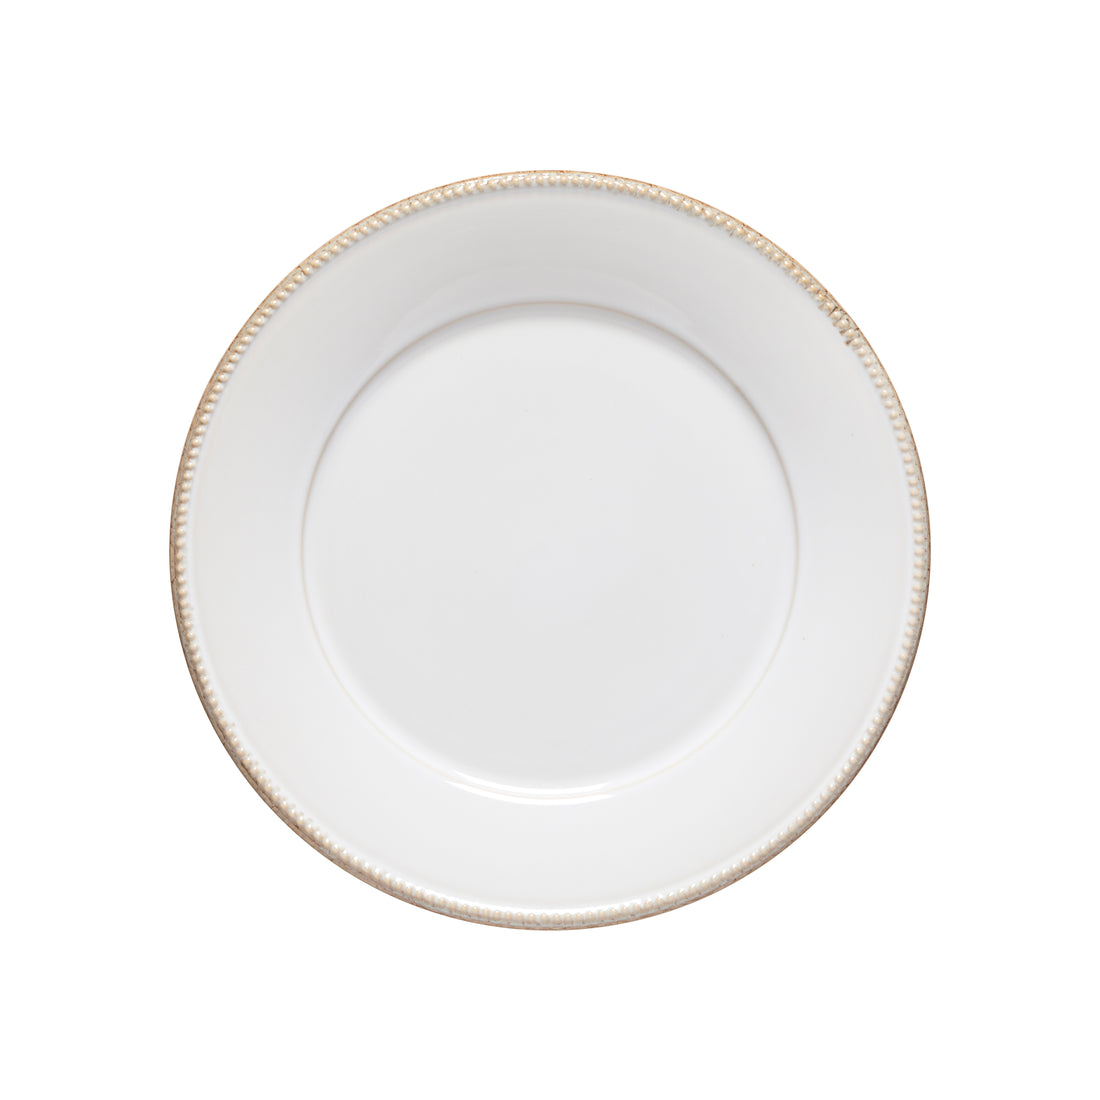 Luzia Dinner Plate